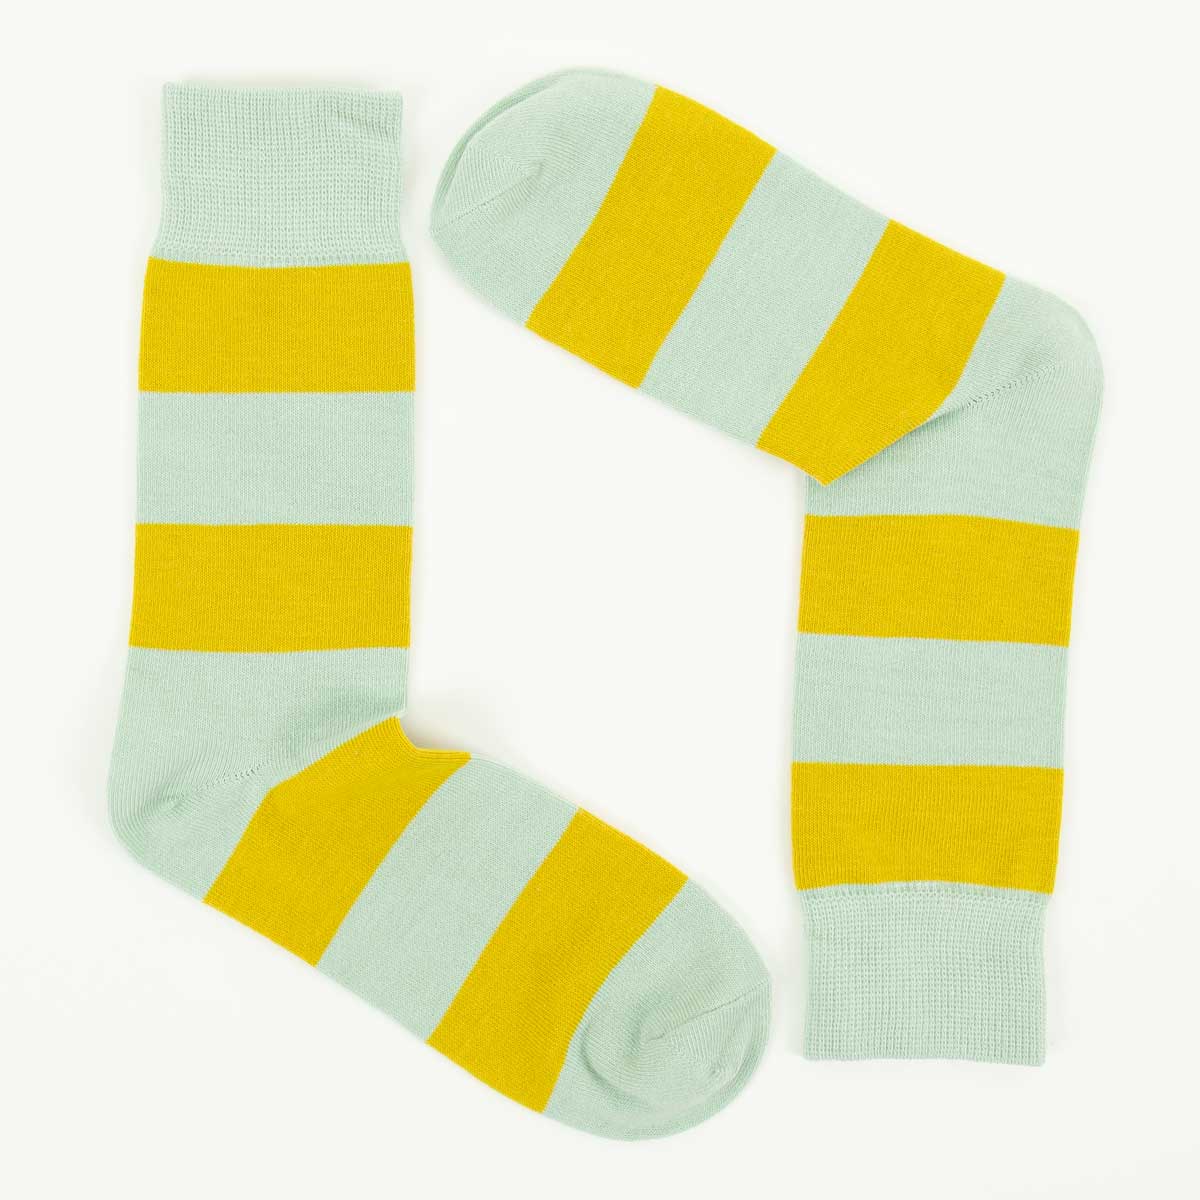 AWOC Socks, mustard/turquoise